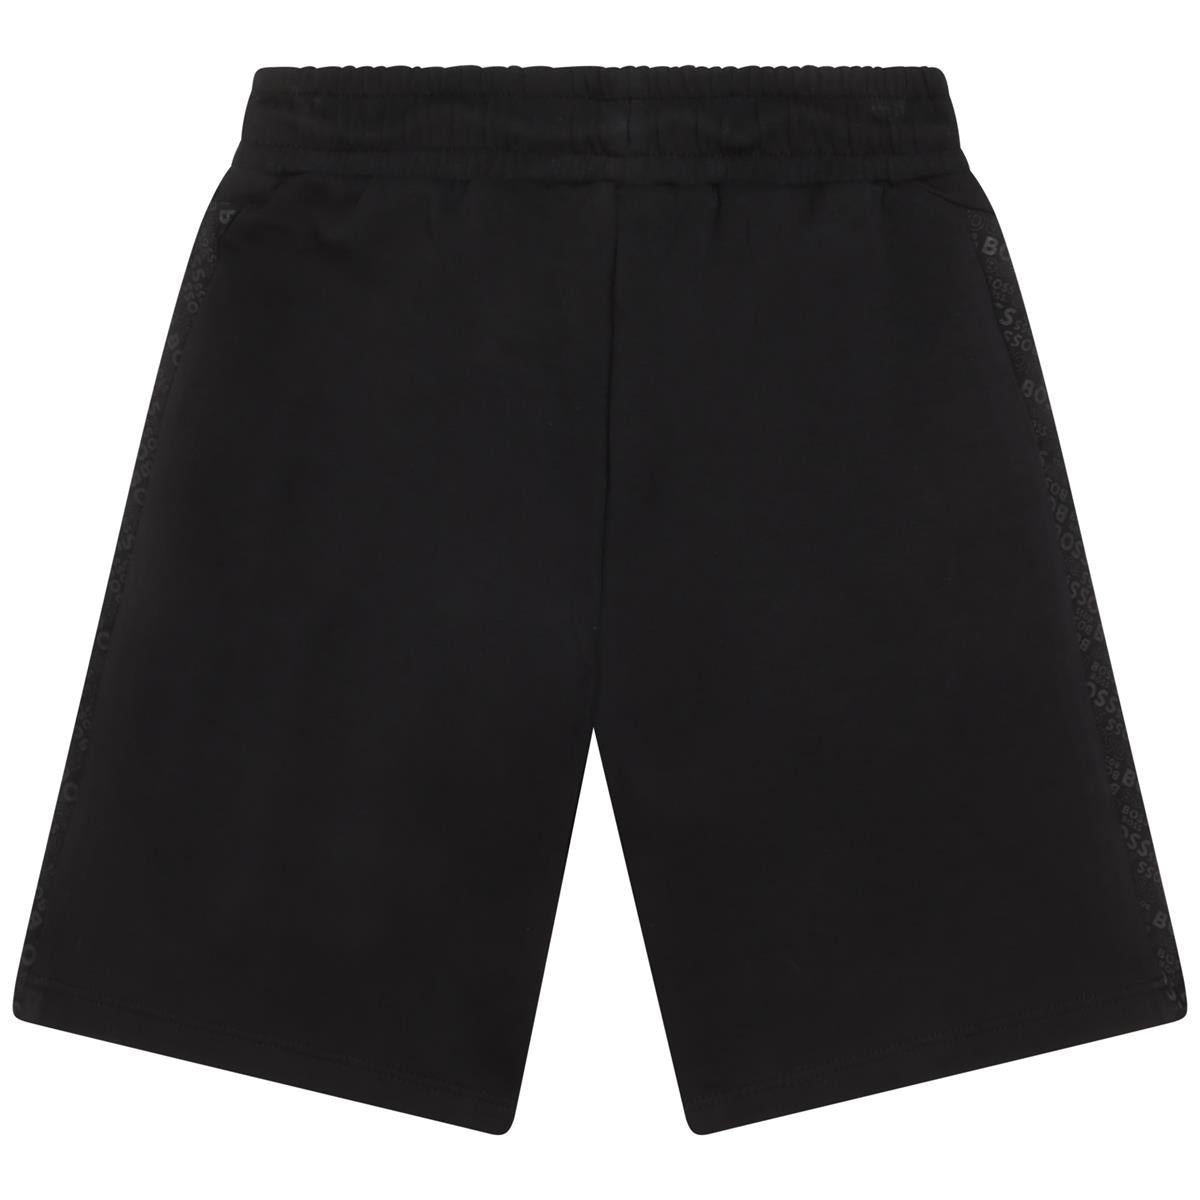 Boys Black Cotton Shorts